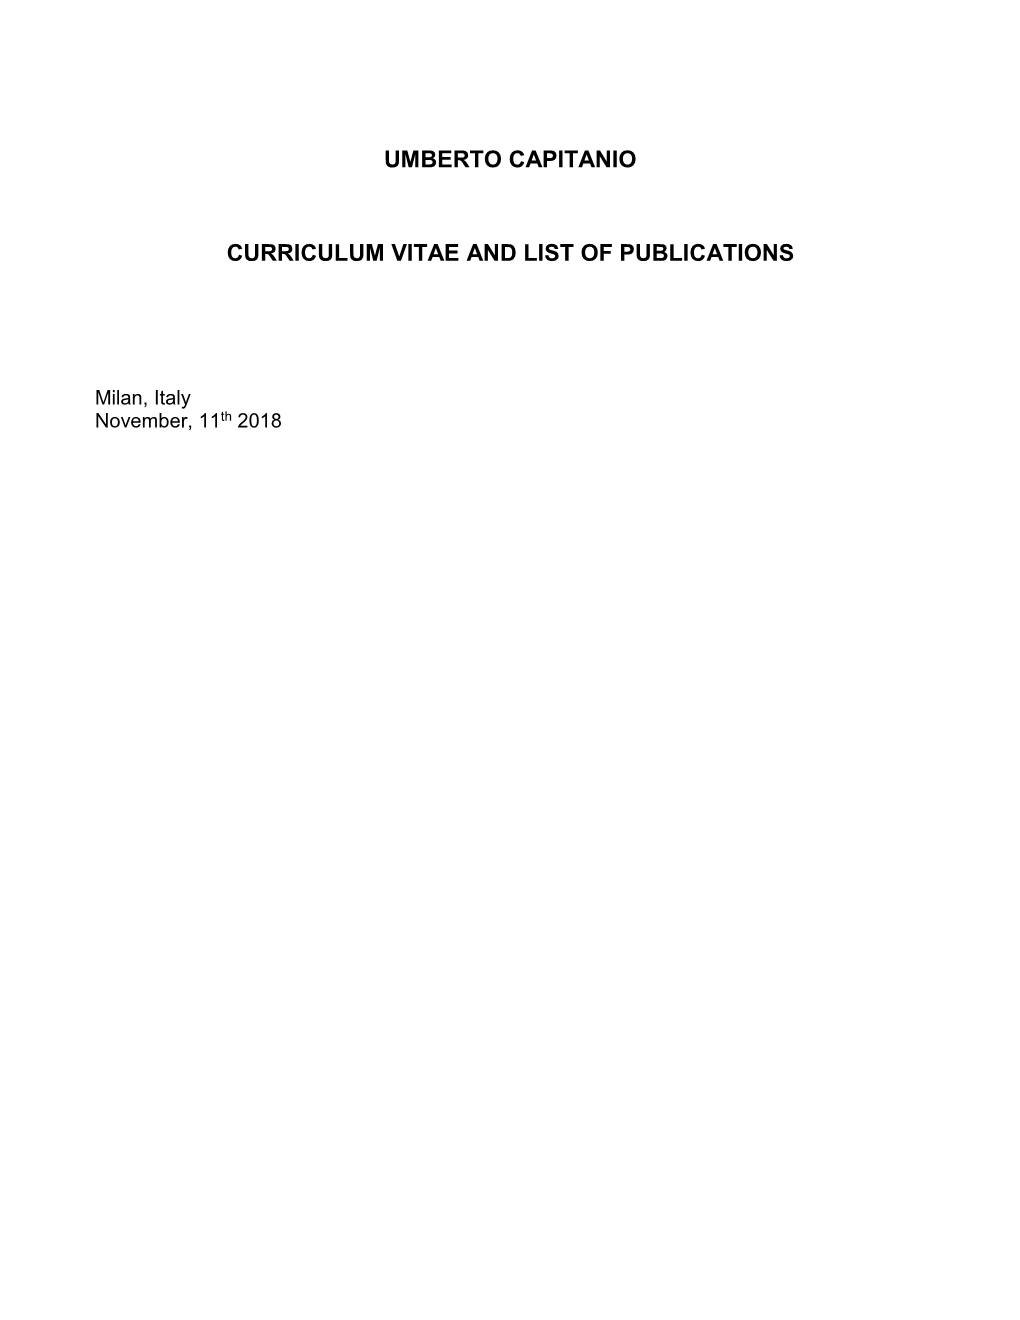 Umberto Capitanio Curriculum Vitae and List